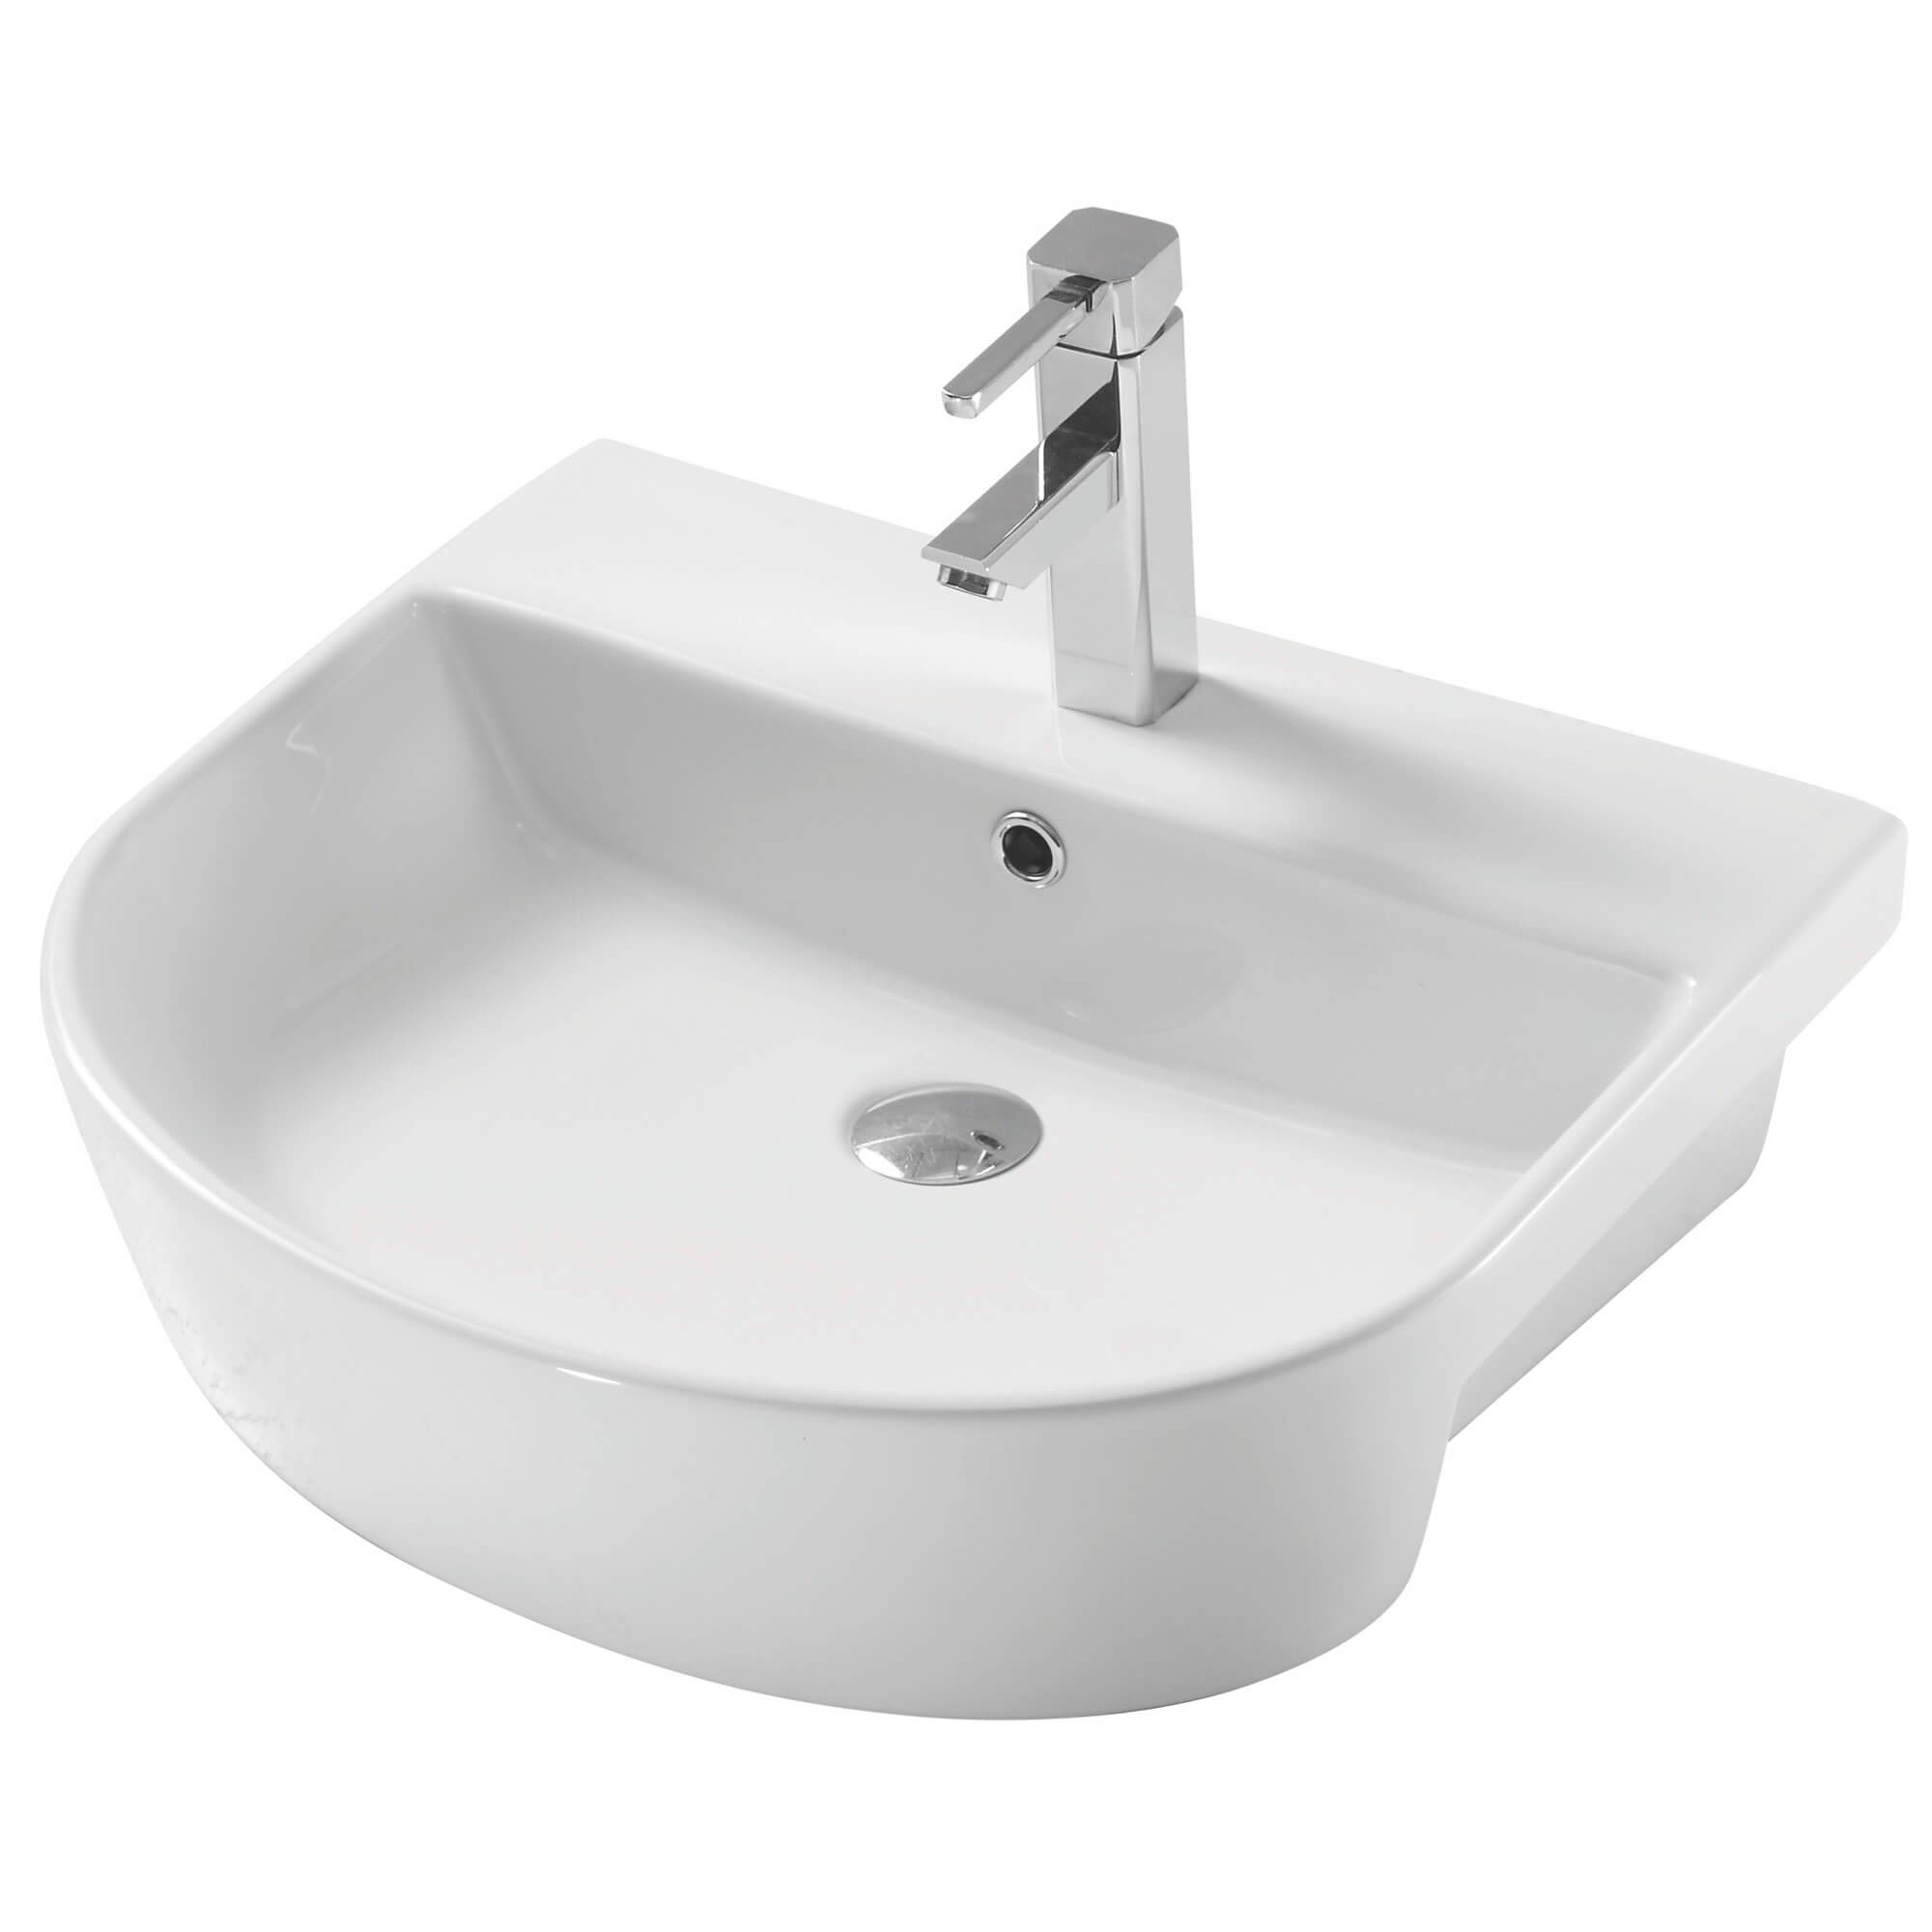 Kartell Modern Bathroom Cloakroom Wash Basin Sink Single Tap Hole Ceramic White 5055681401184 